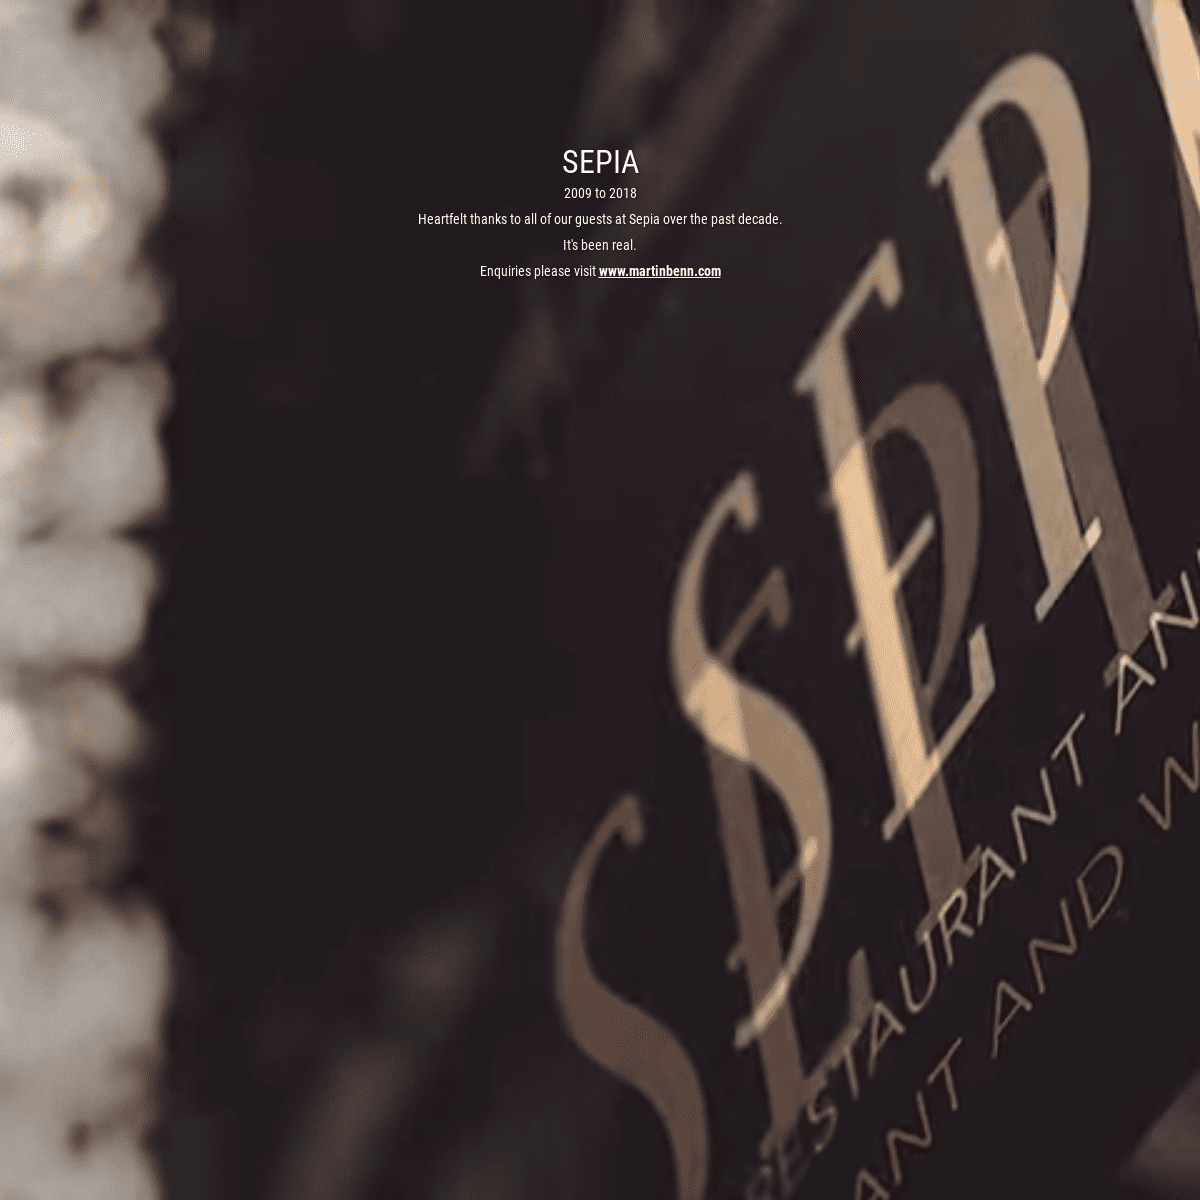 Sepia Restaurant - Restaurant of the Year 2015 - Sepia Restaurant